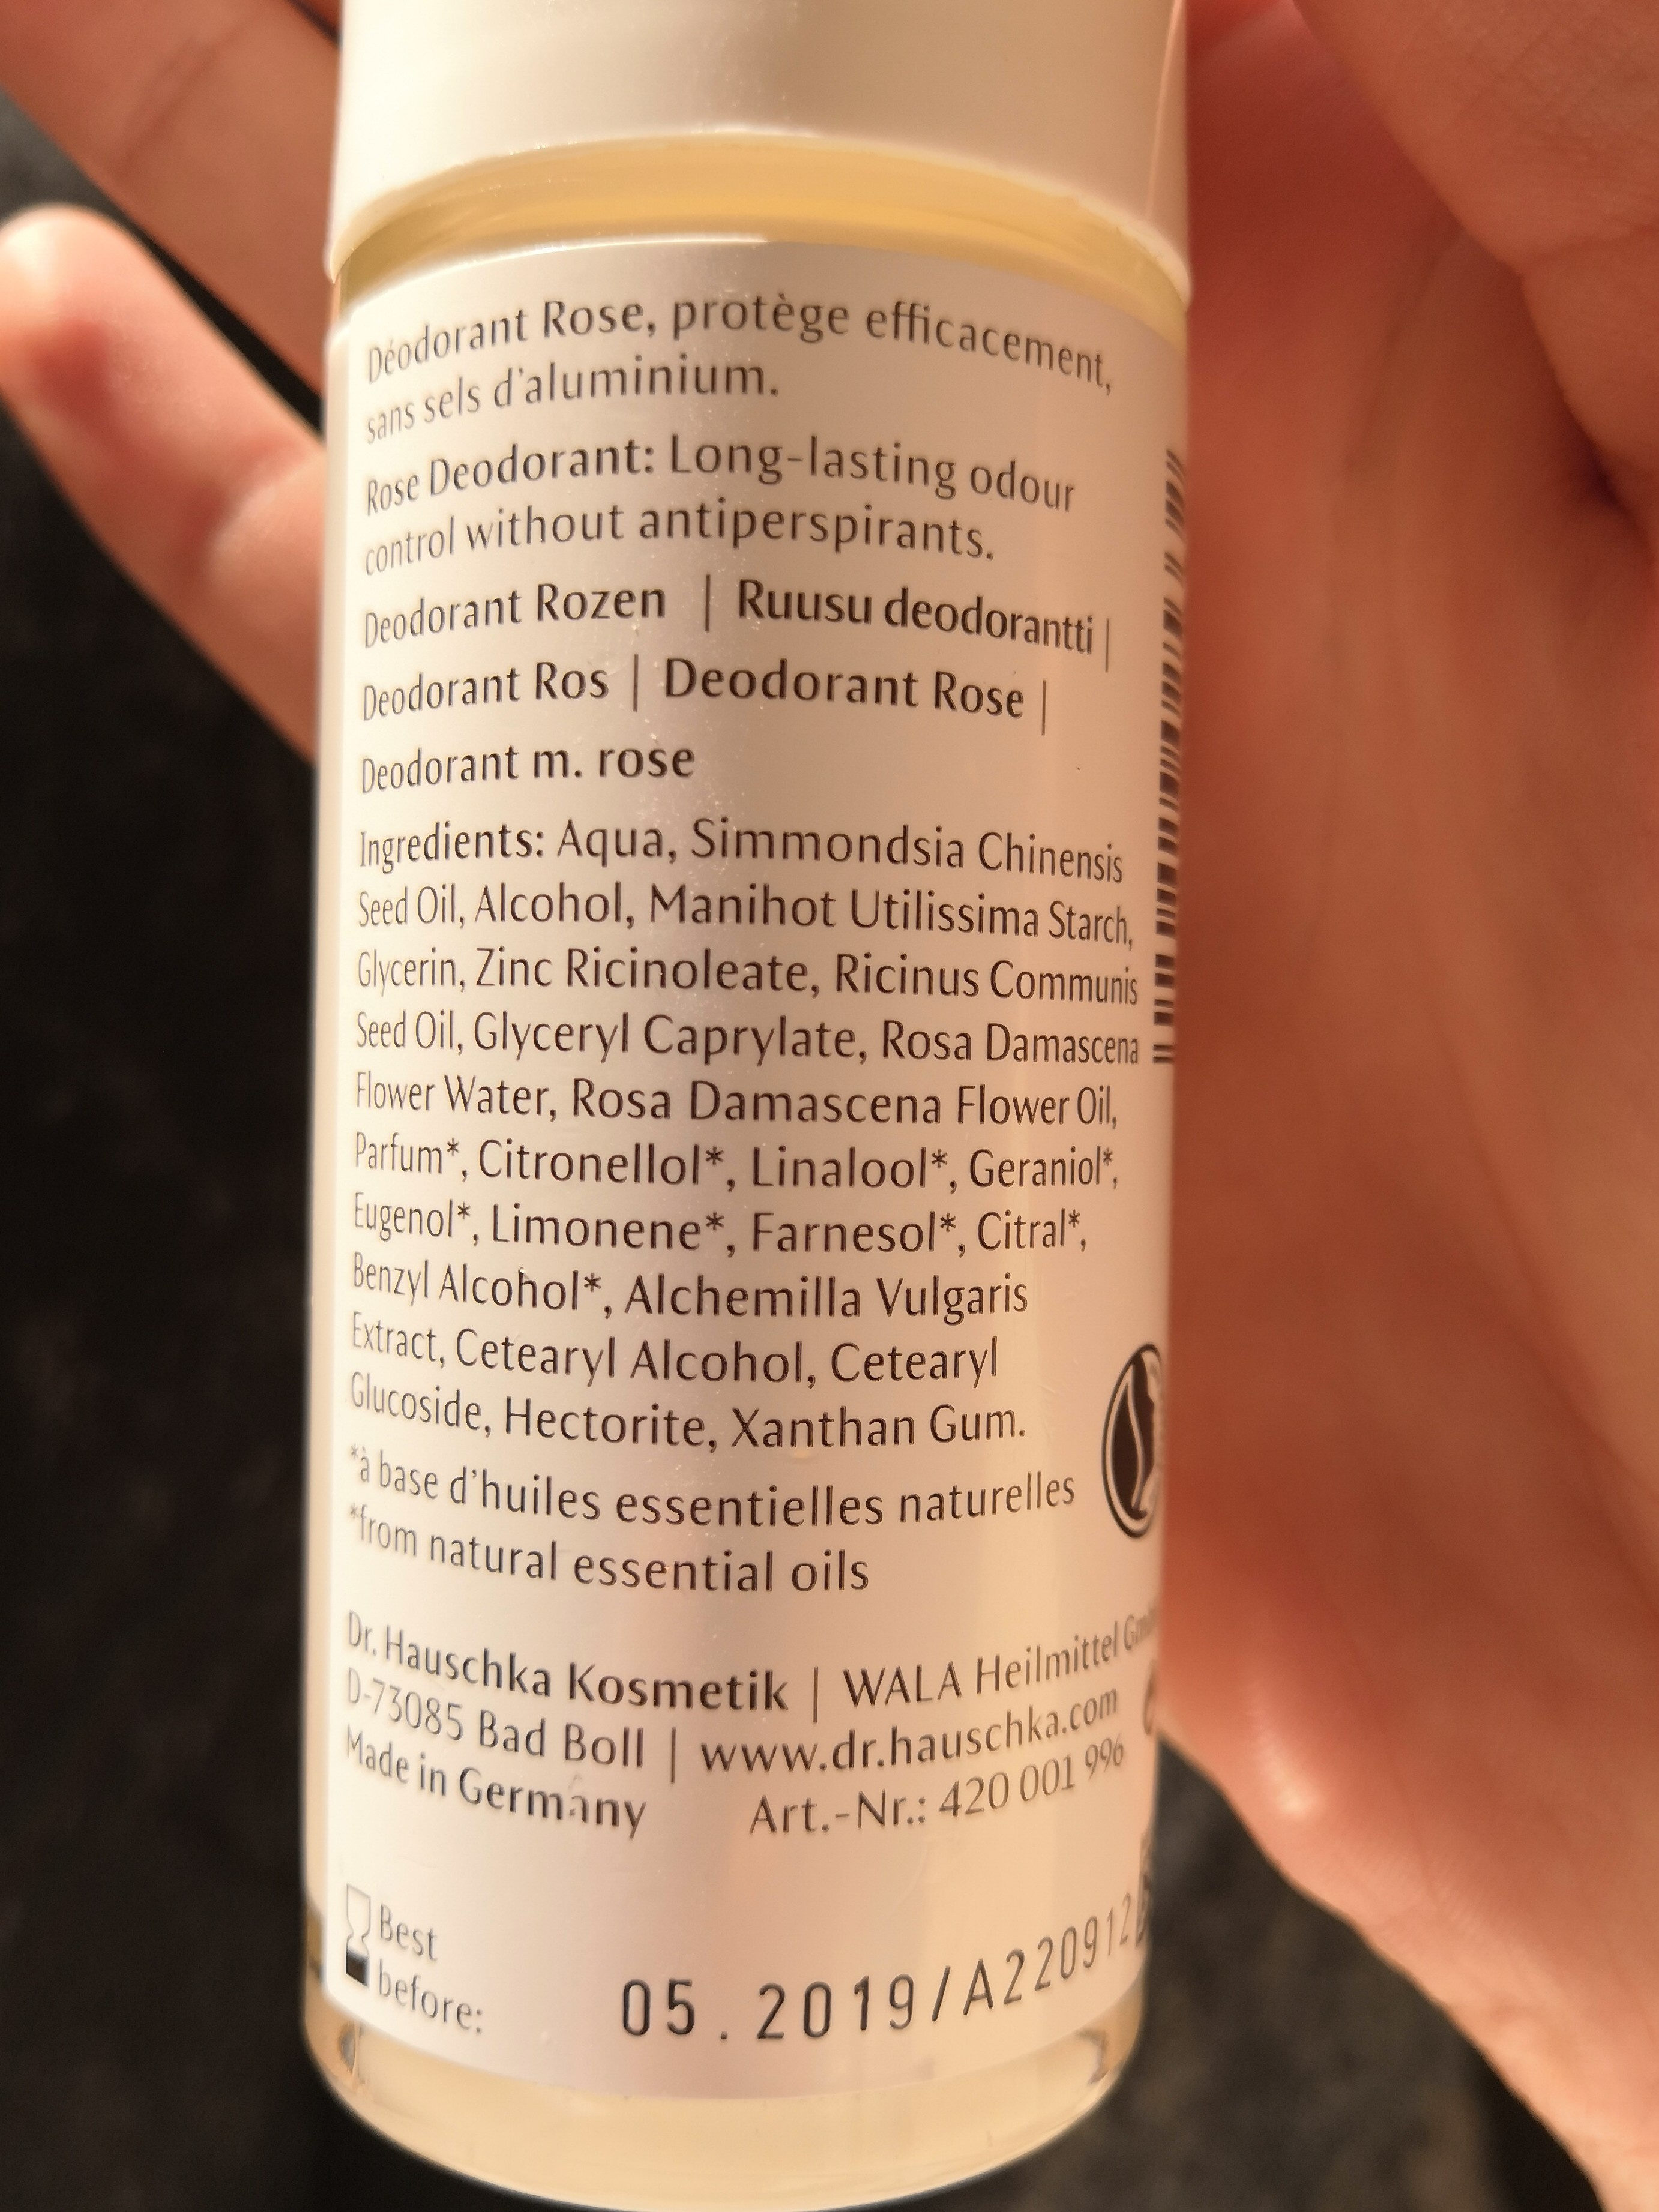 Déodorant rose - Ingredients - fr